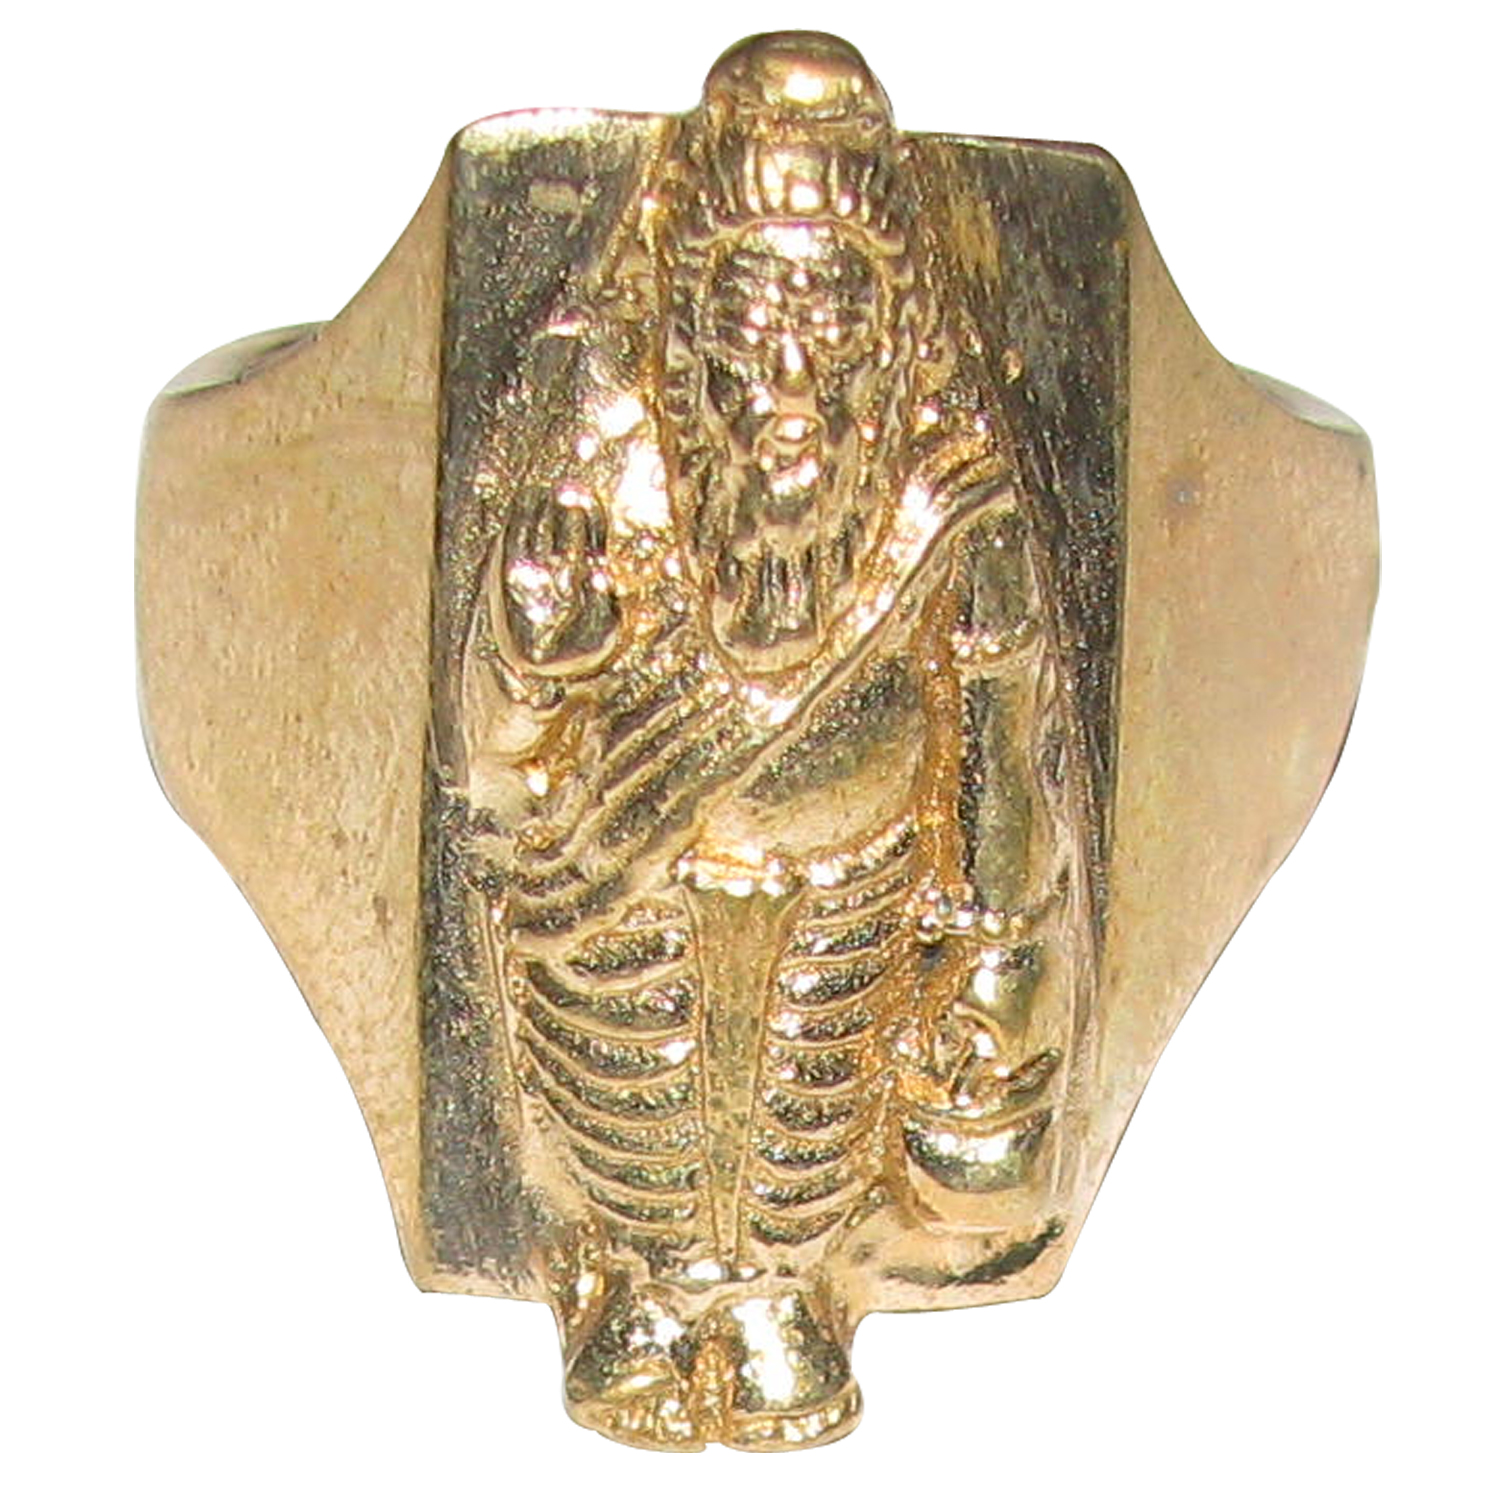 Aadhyathmika Aimpon Panchalogam Kumbha Rashi (Rasi) Ring Panchaloha  Aquarius Zodiac Sign Ring (5 Metals Panchadhatu) - A4820 - Season Bazaar